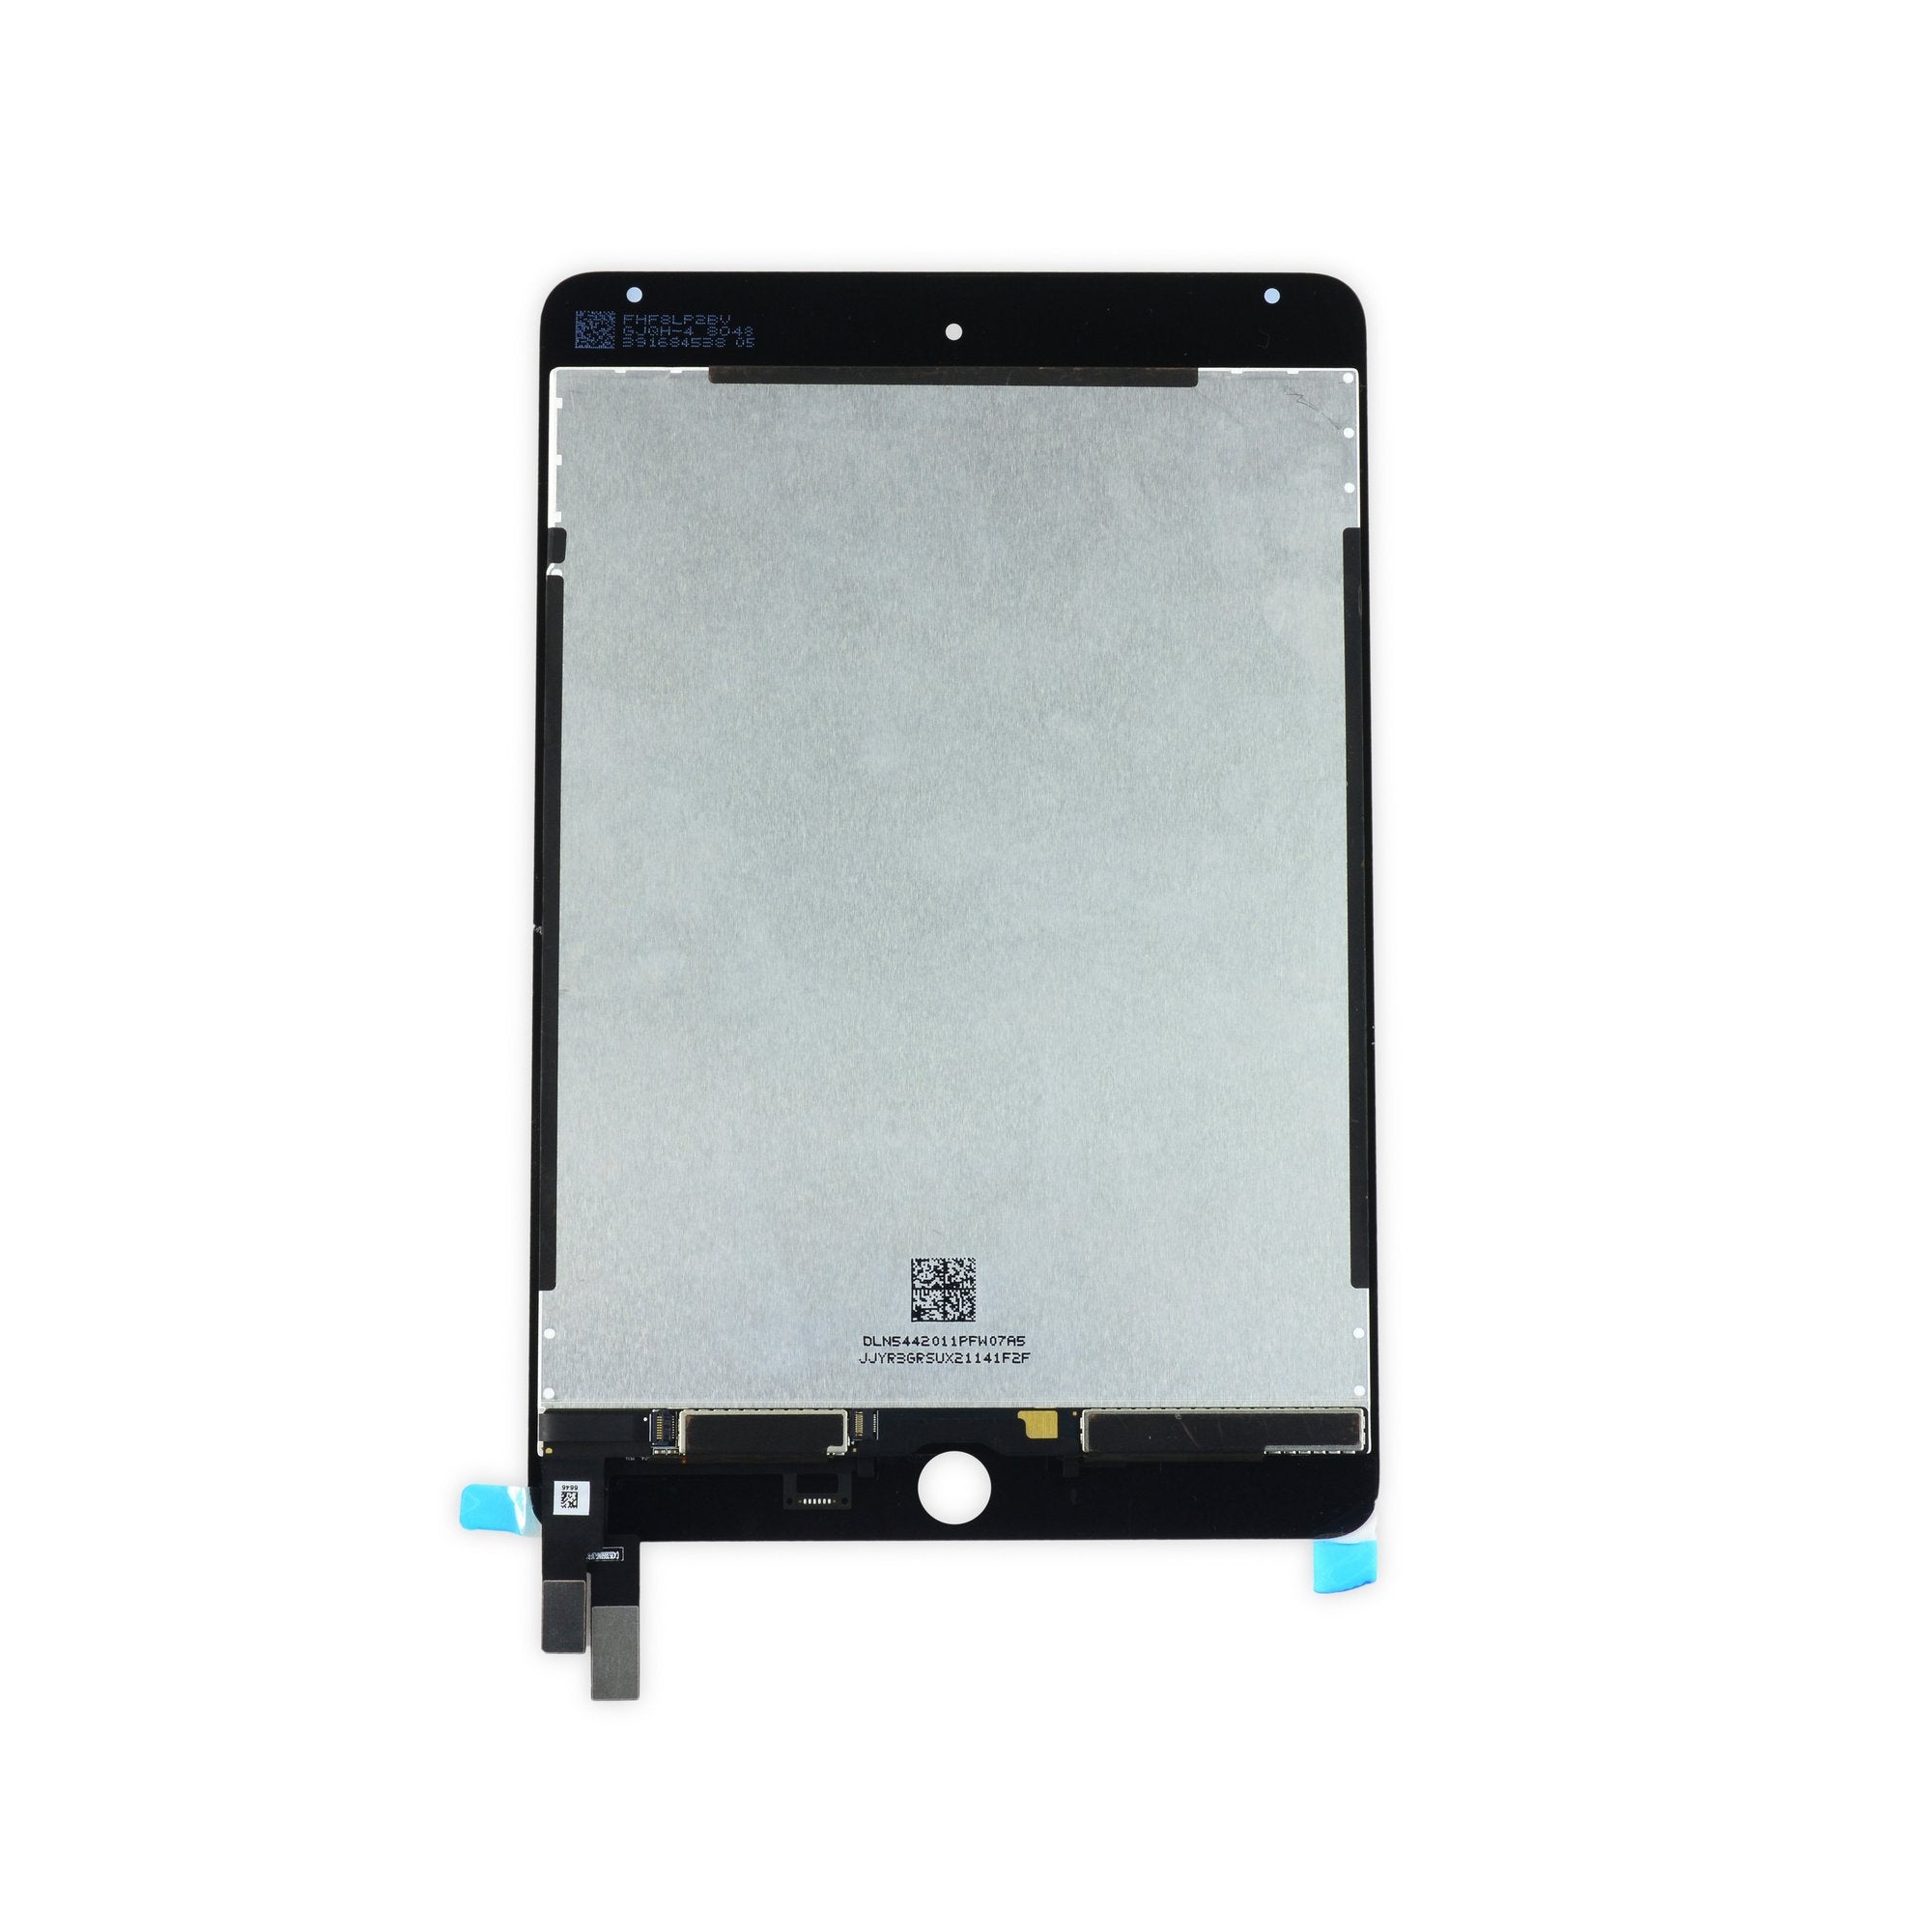 iPad mini 4 LTE Screen and Digitizer Replacement - iFixit Repair Guide